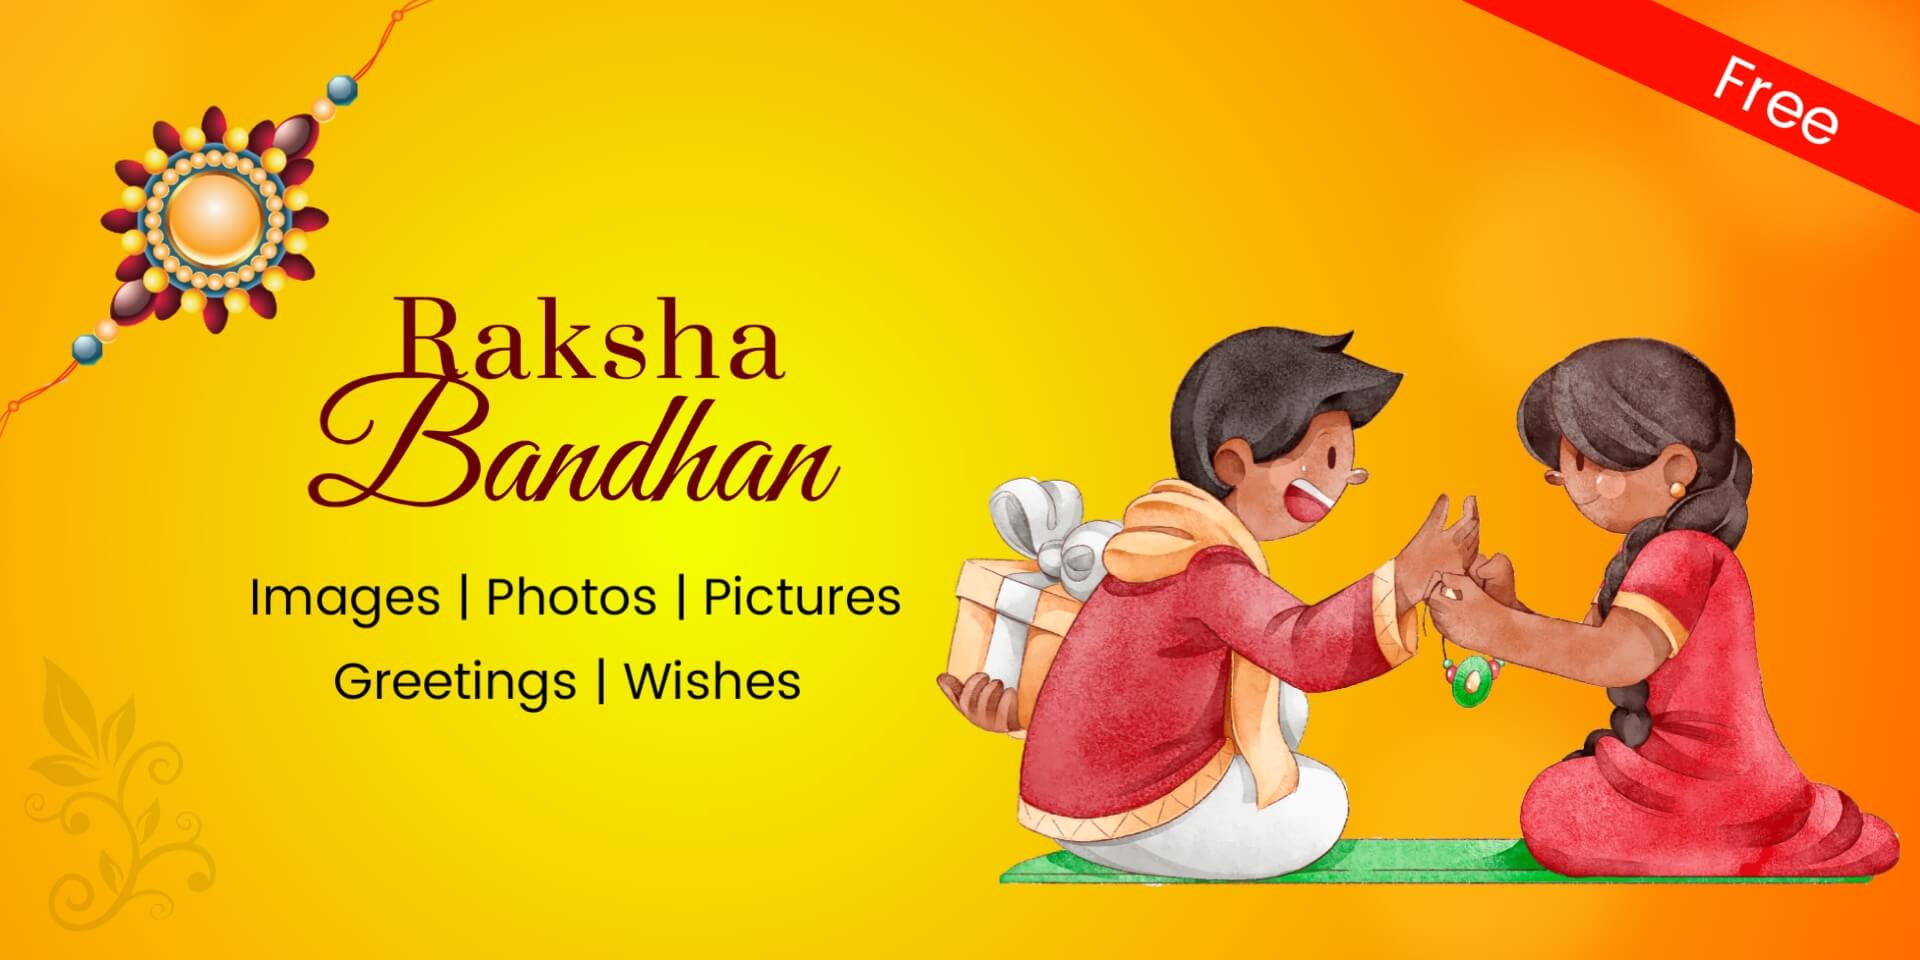 50+ Best Happy Raksha Bandhan Images, Photos & Pictures 2022